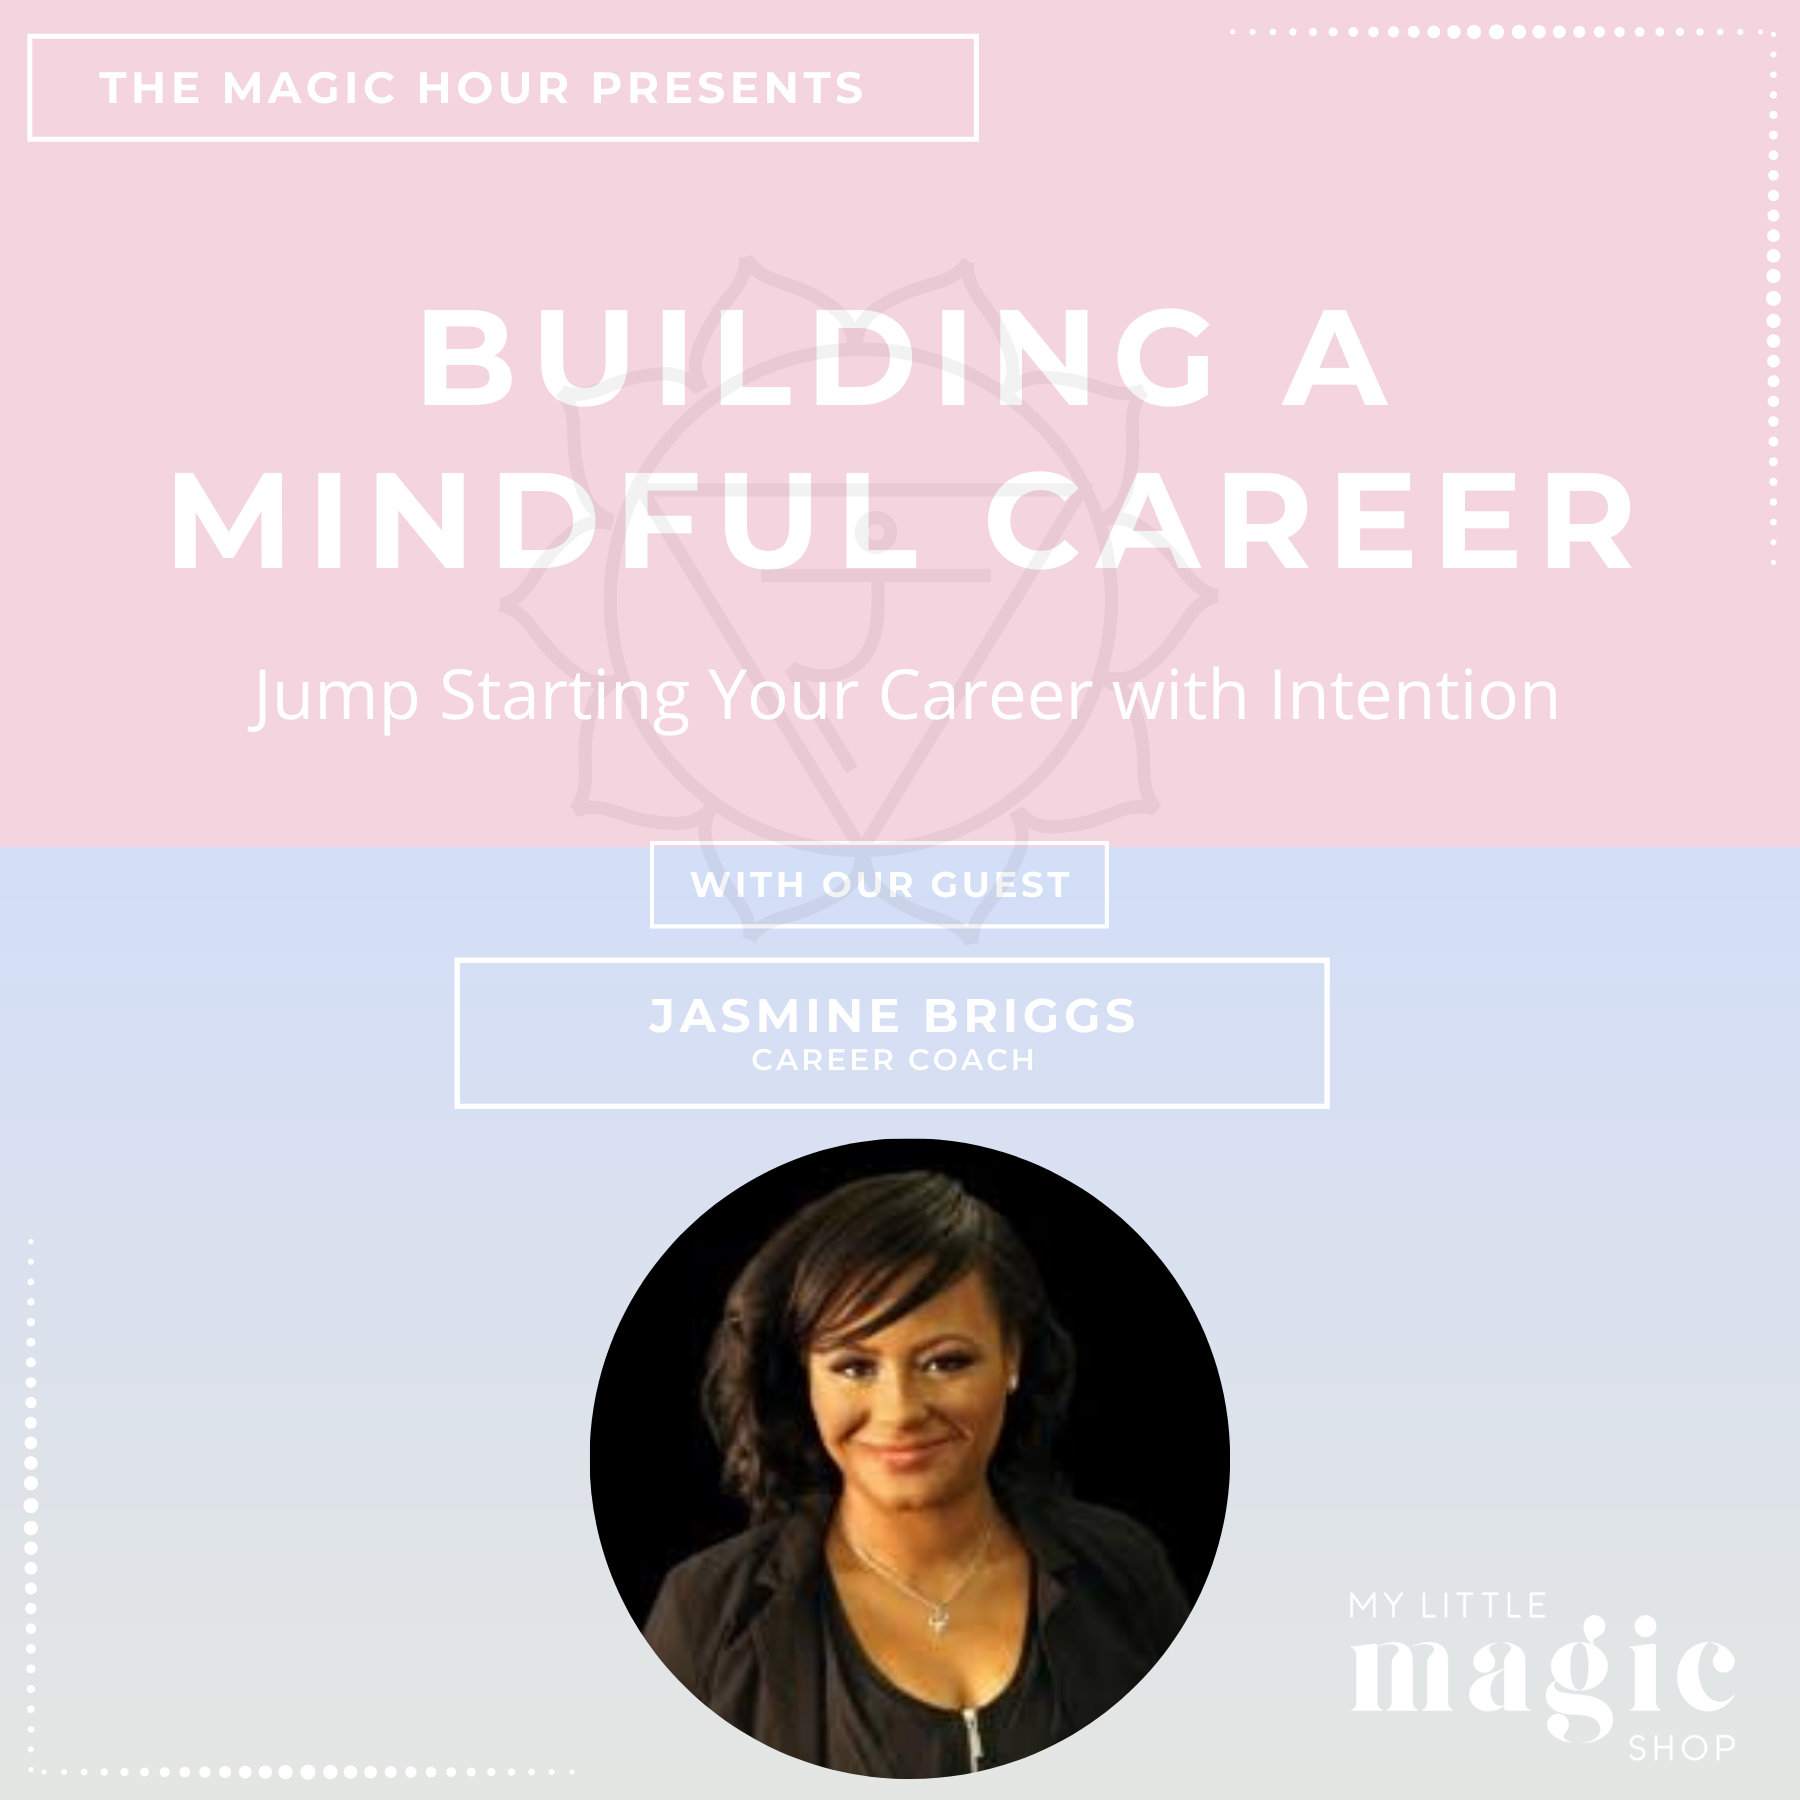 A Mindful Career with Jasmine Briggs